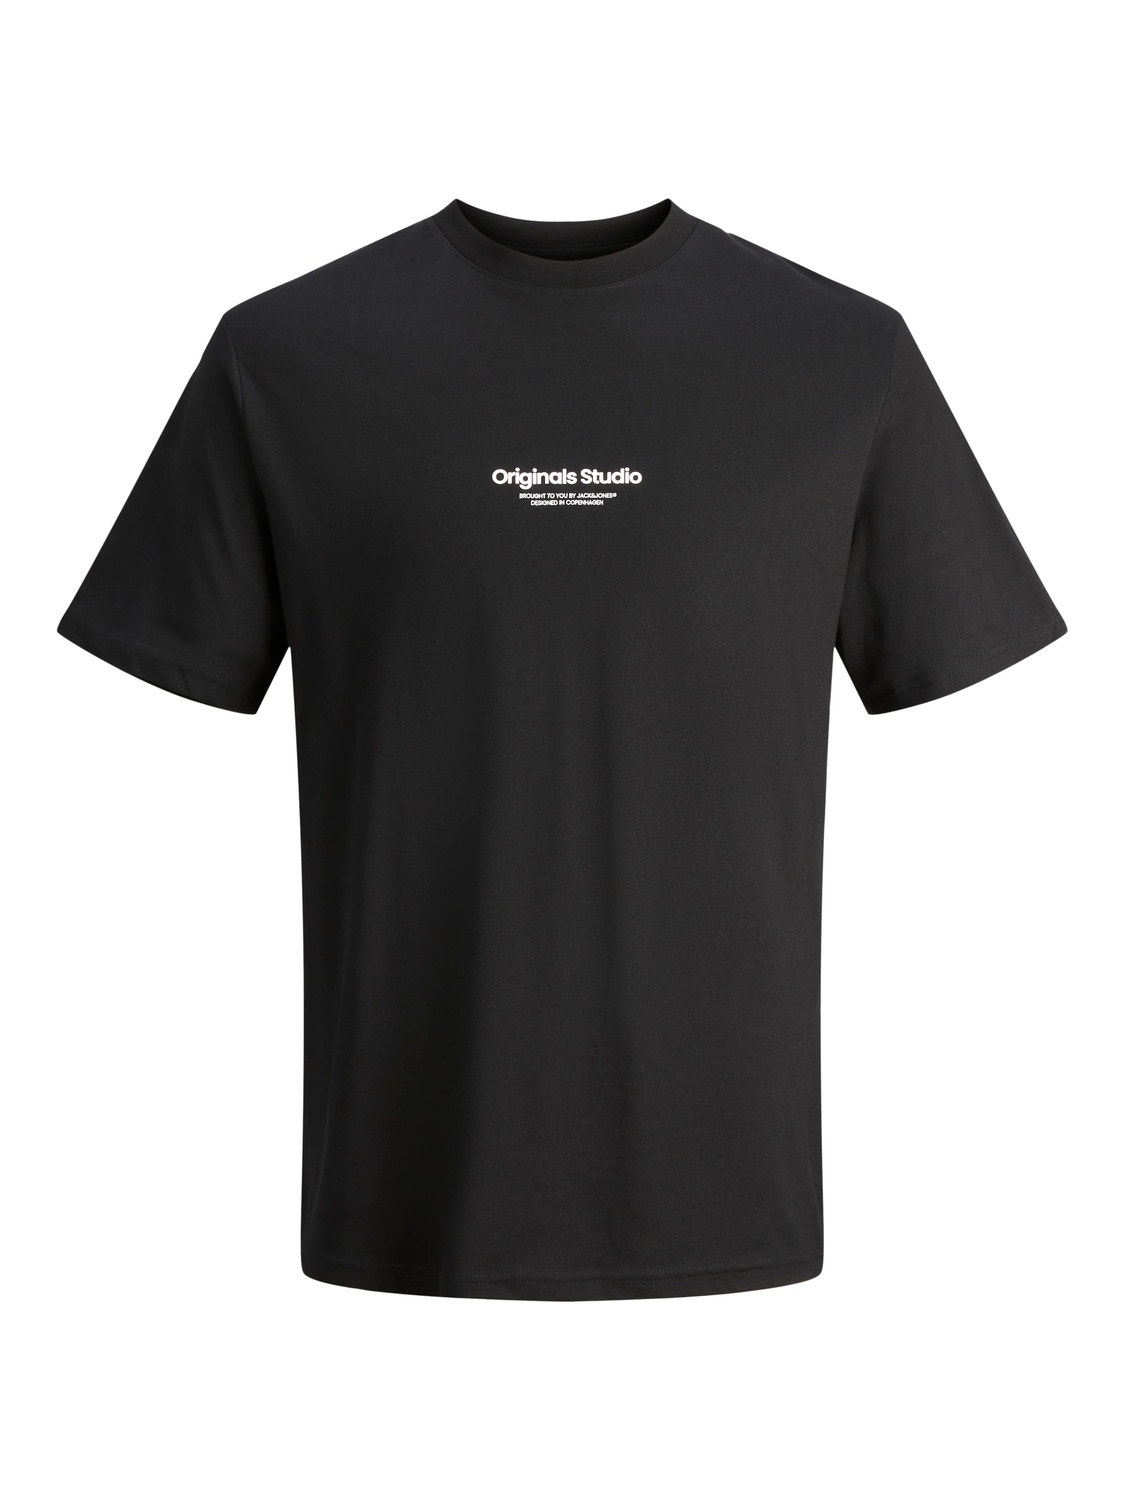 Jack & Jones Plus Size T-shirt Stampato -Black - 12248177